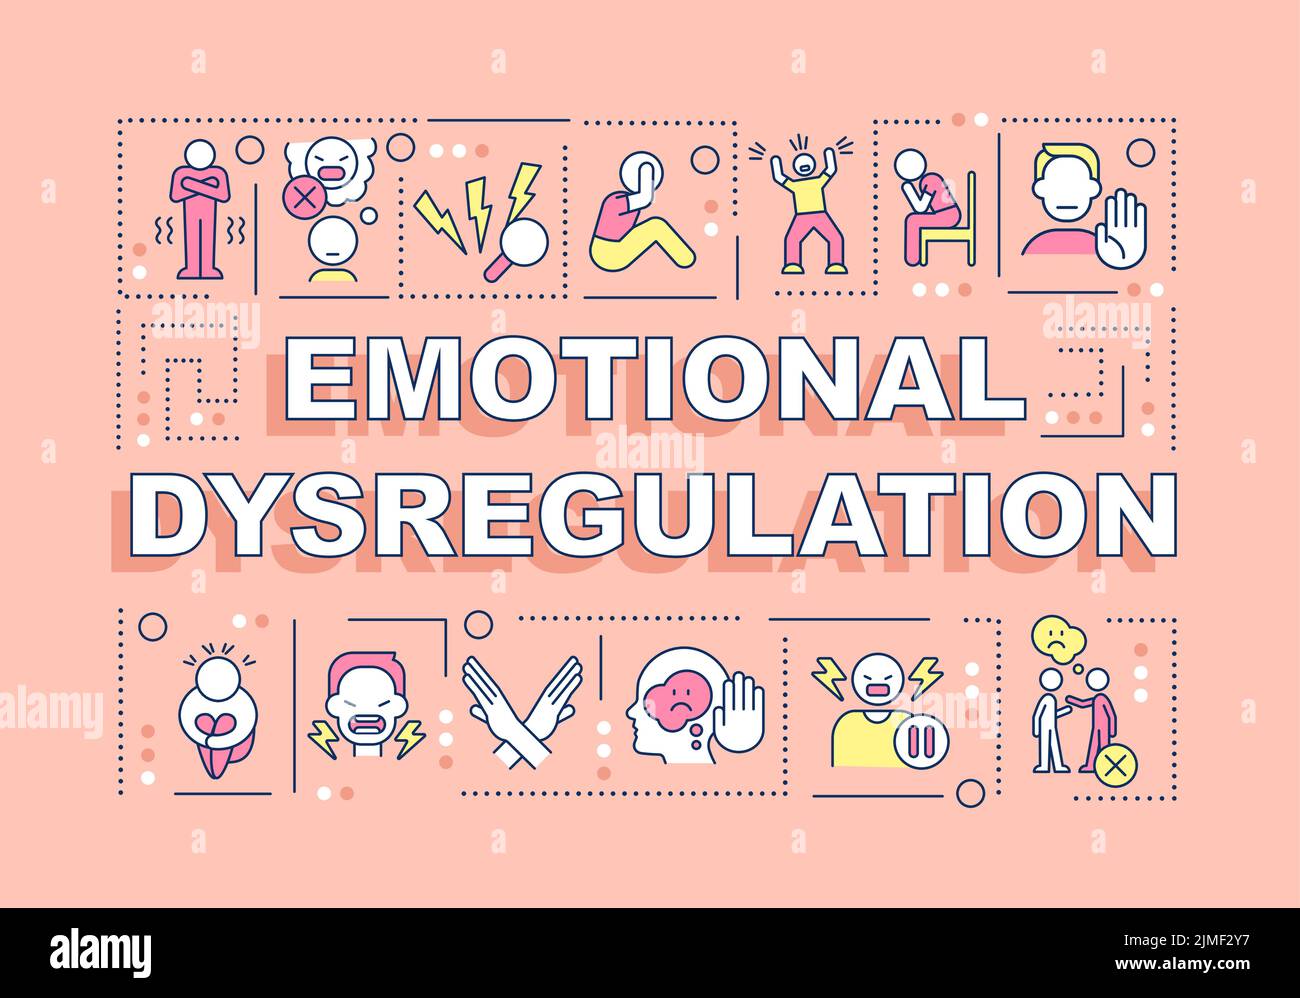 Emotional dysregulation word concepts pink banner Stock Vector